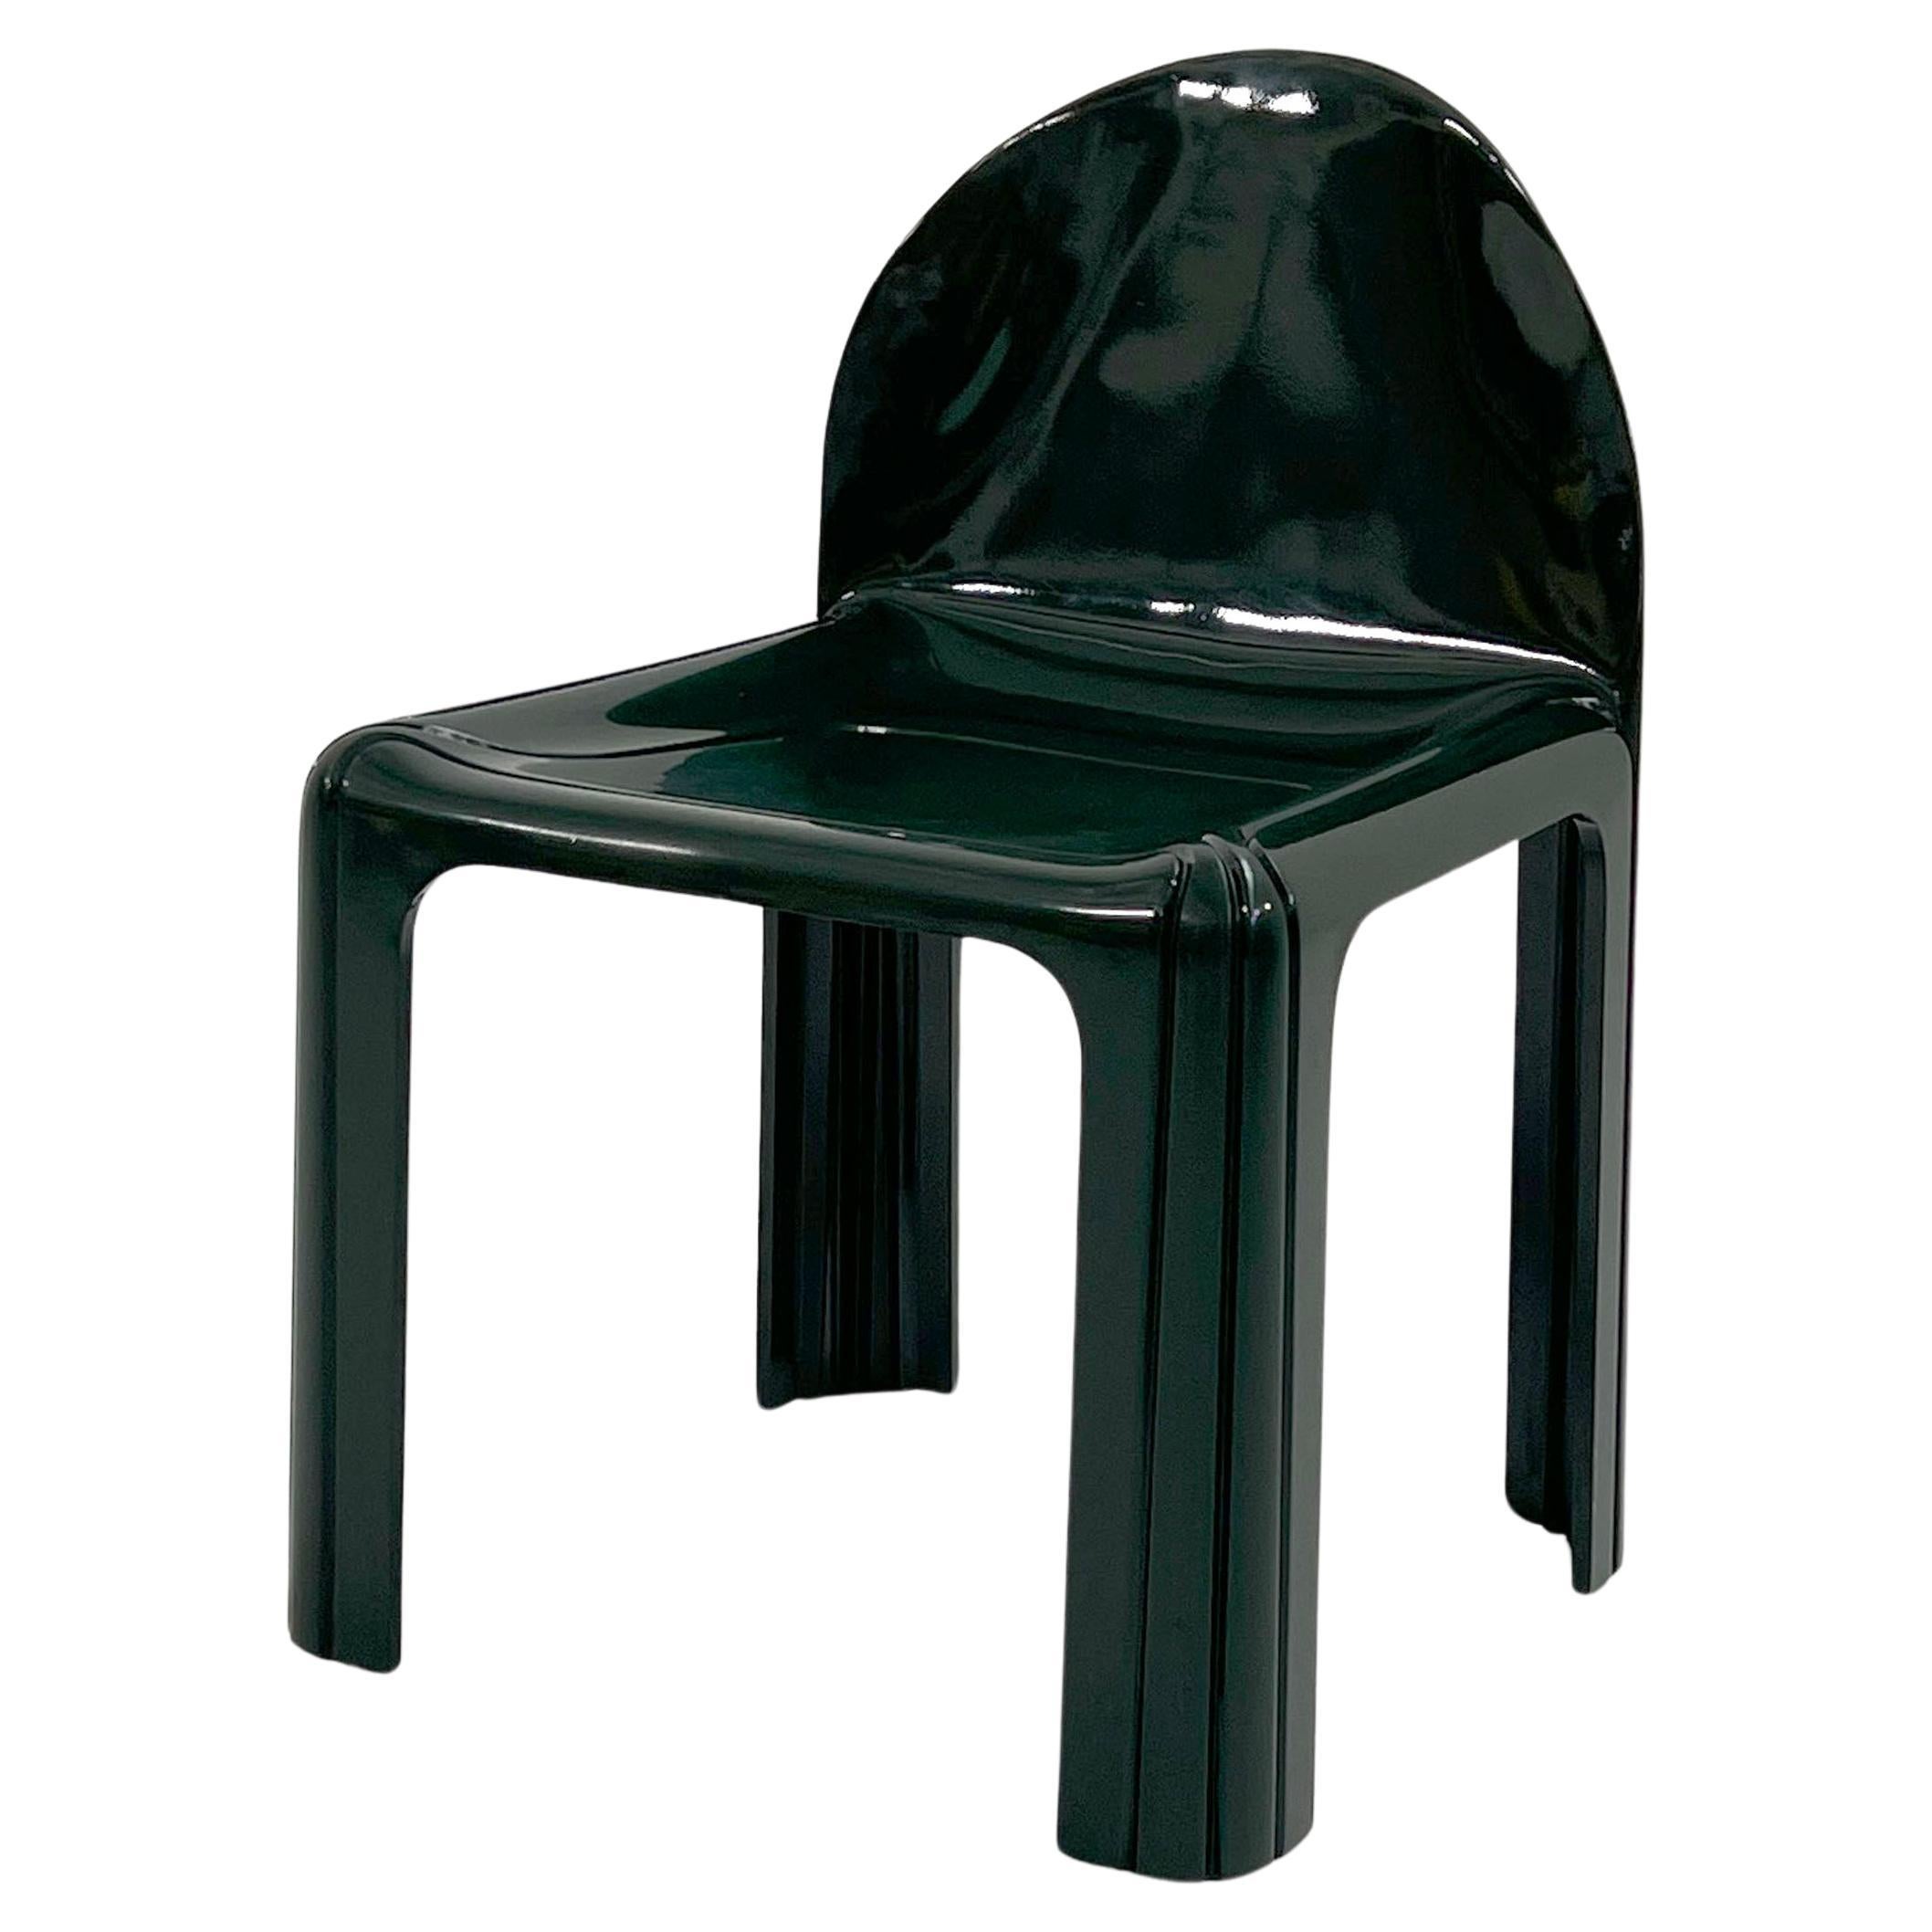 Dark Green Model 4854 Chair by Gae Aulenti for Kartell, 1970s